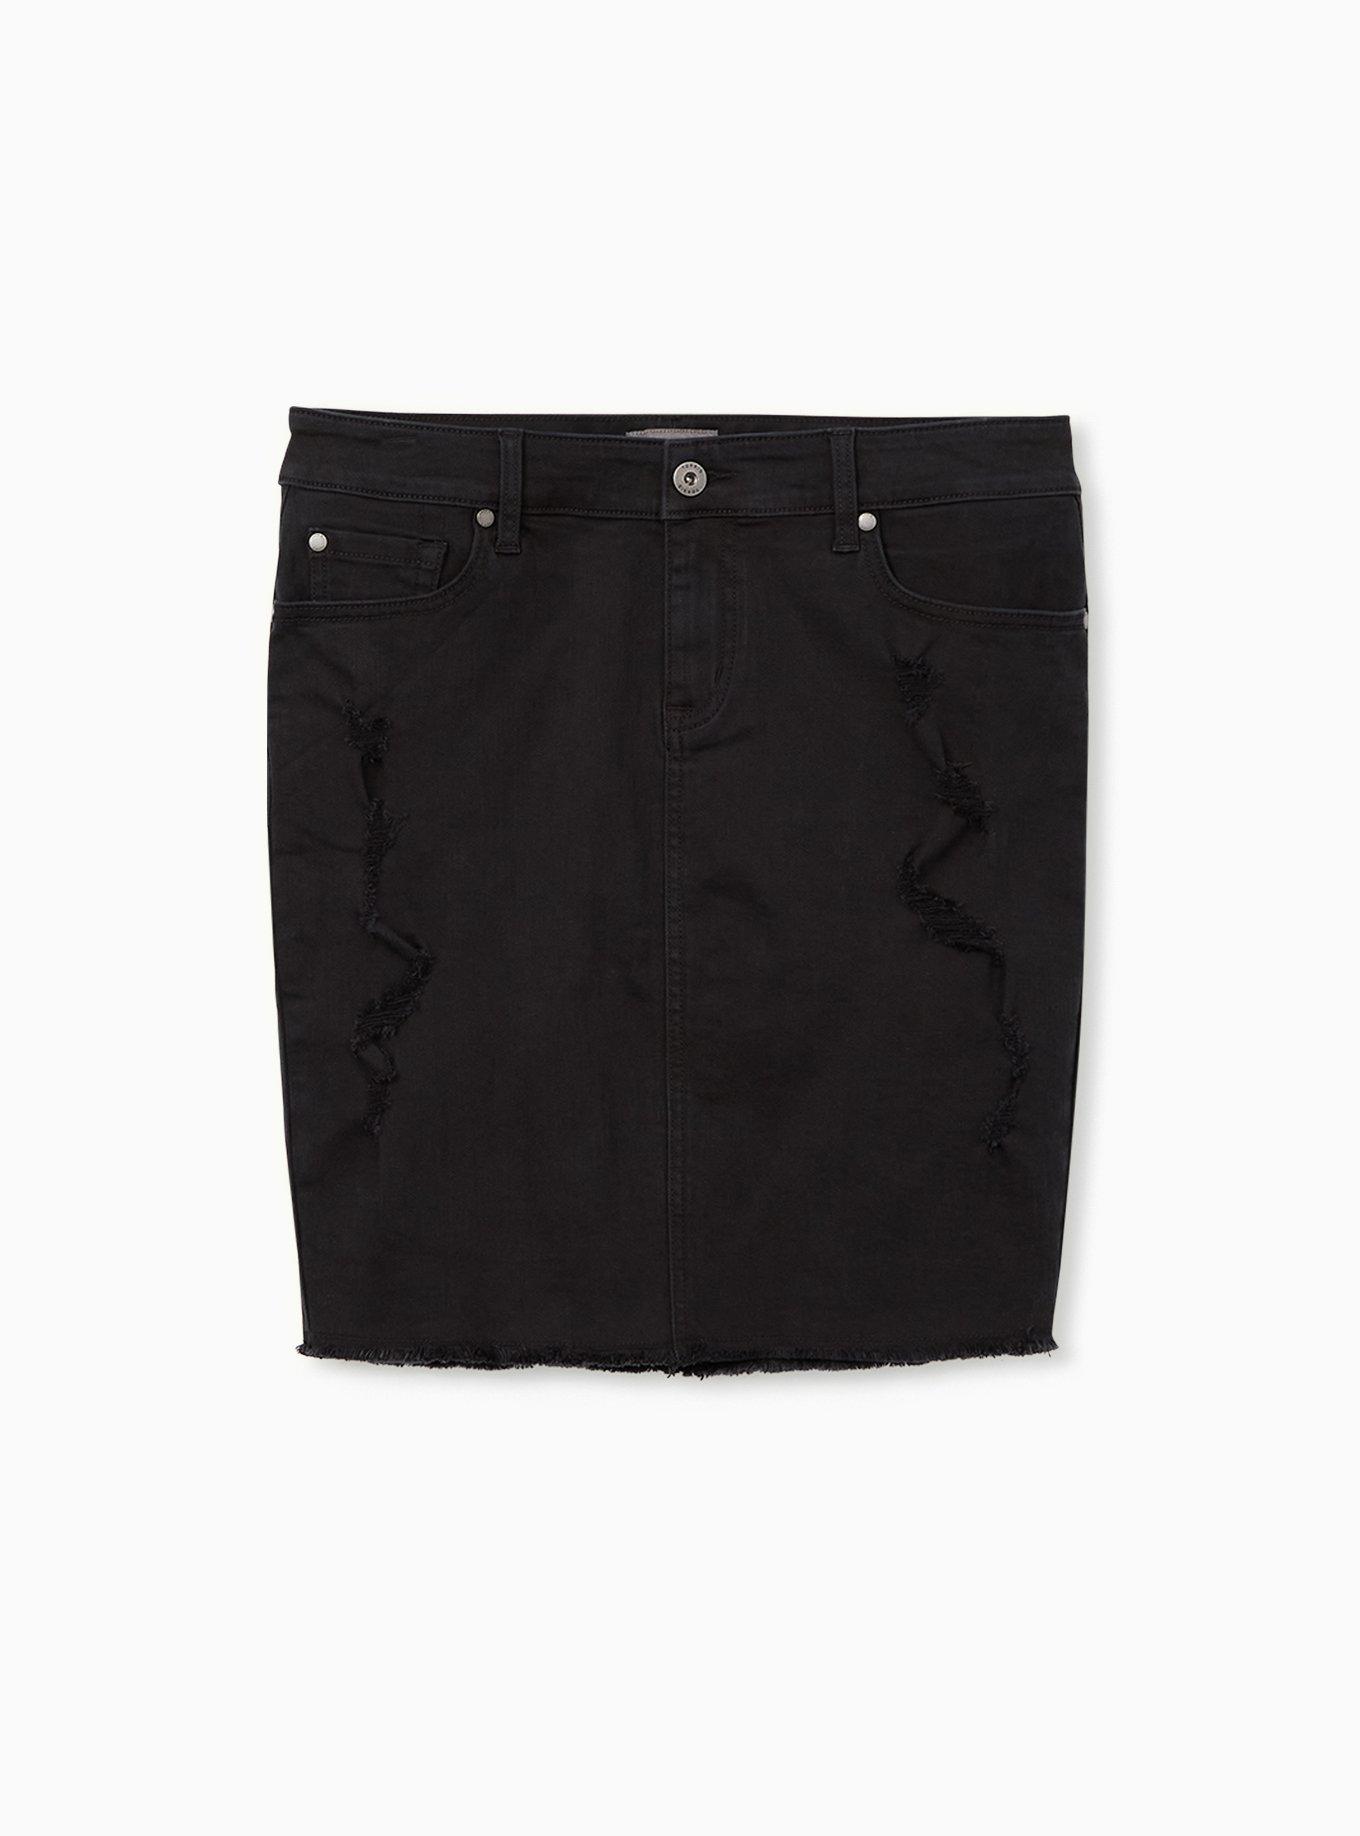 Plus Size - Mini Denim Skirt - Black - Torrid